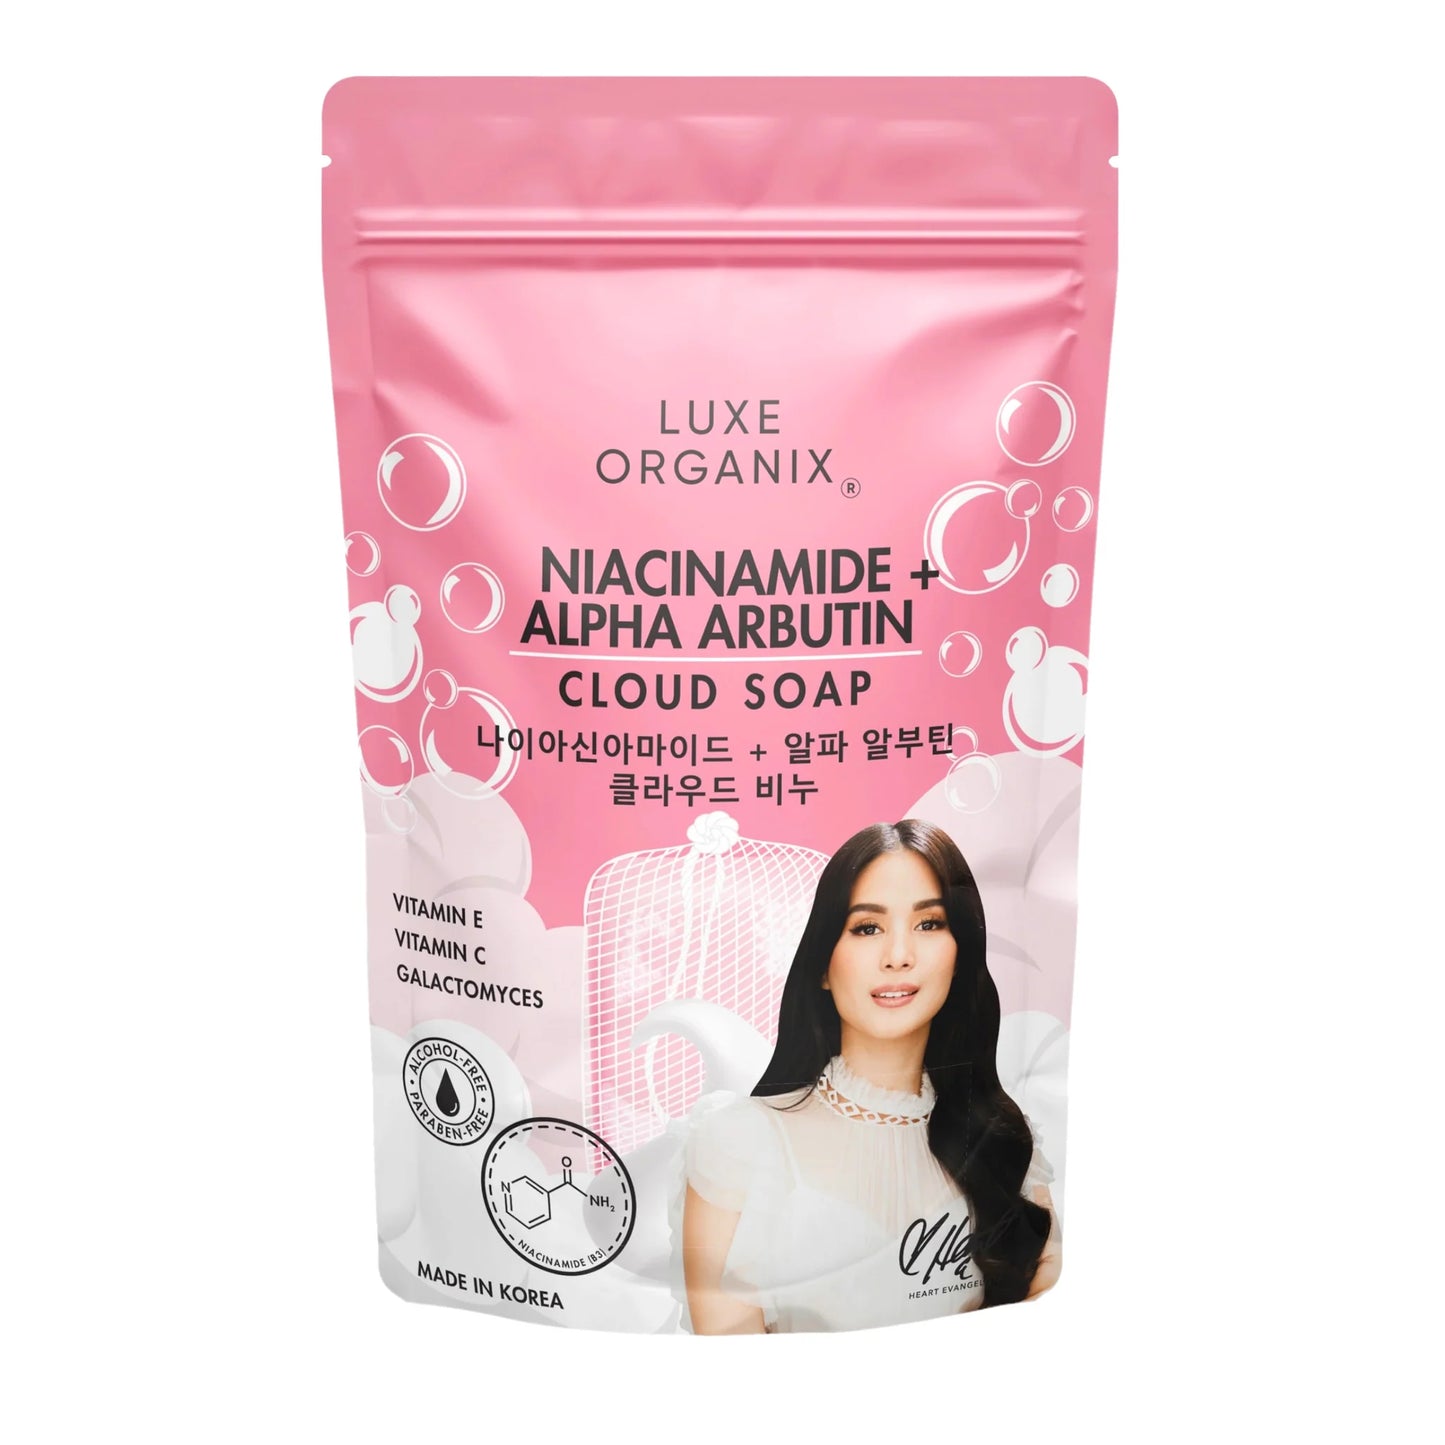 Niacinamide + Alpha Arbutin Cloud Soap (180g)